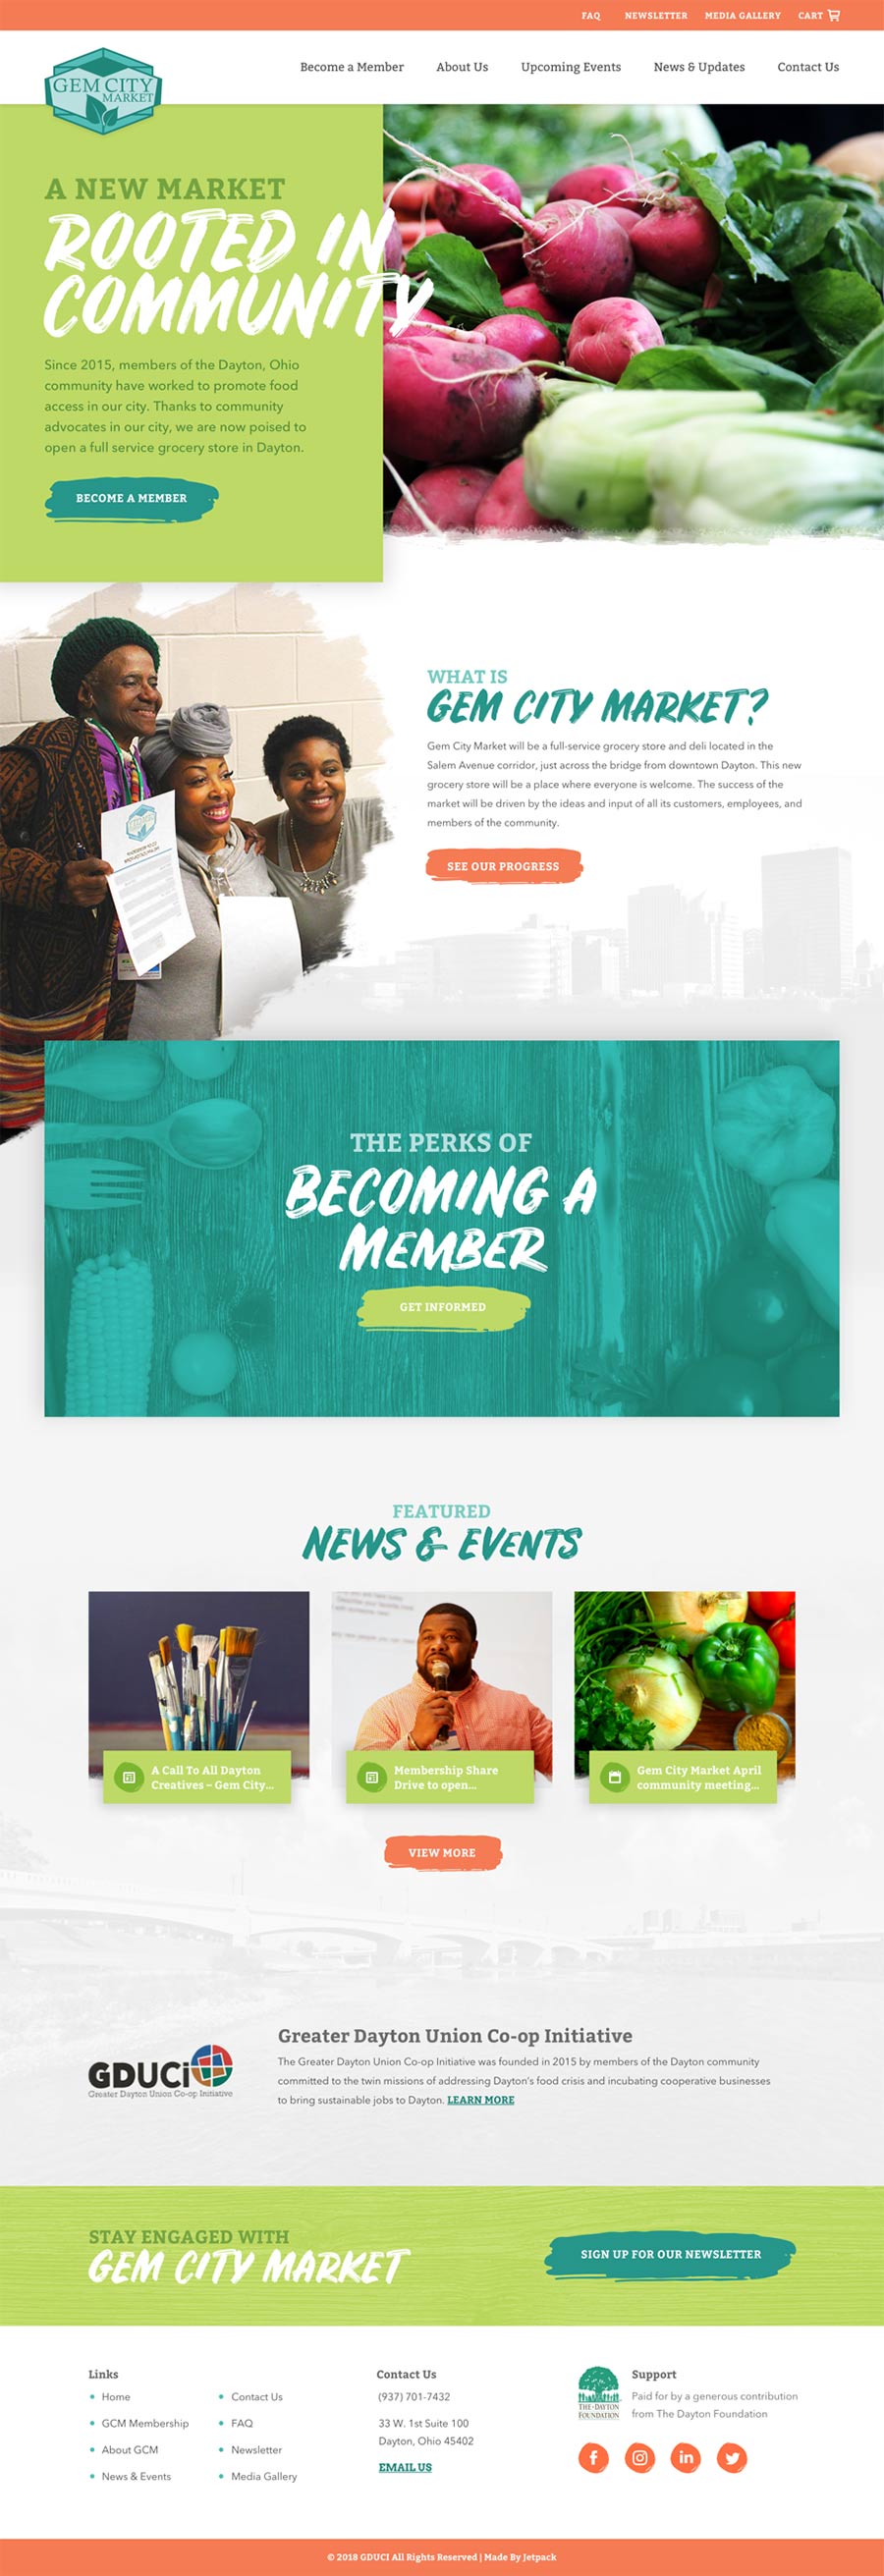 Gem City Market Website - Full Screenshot